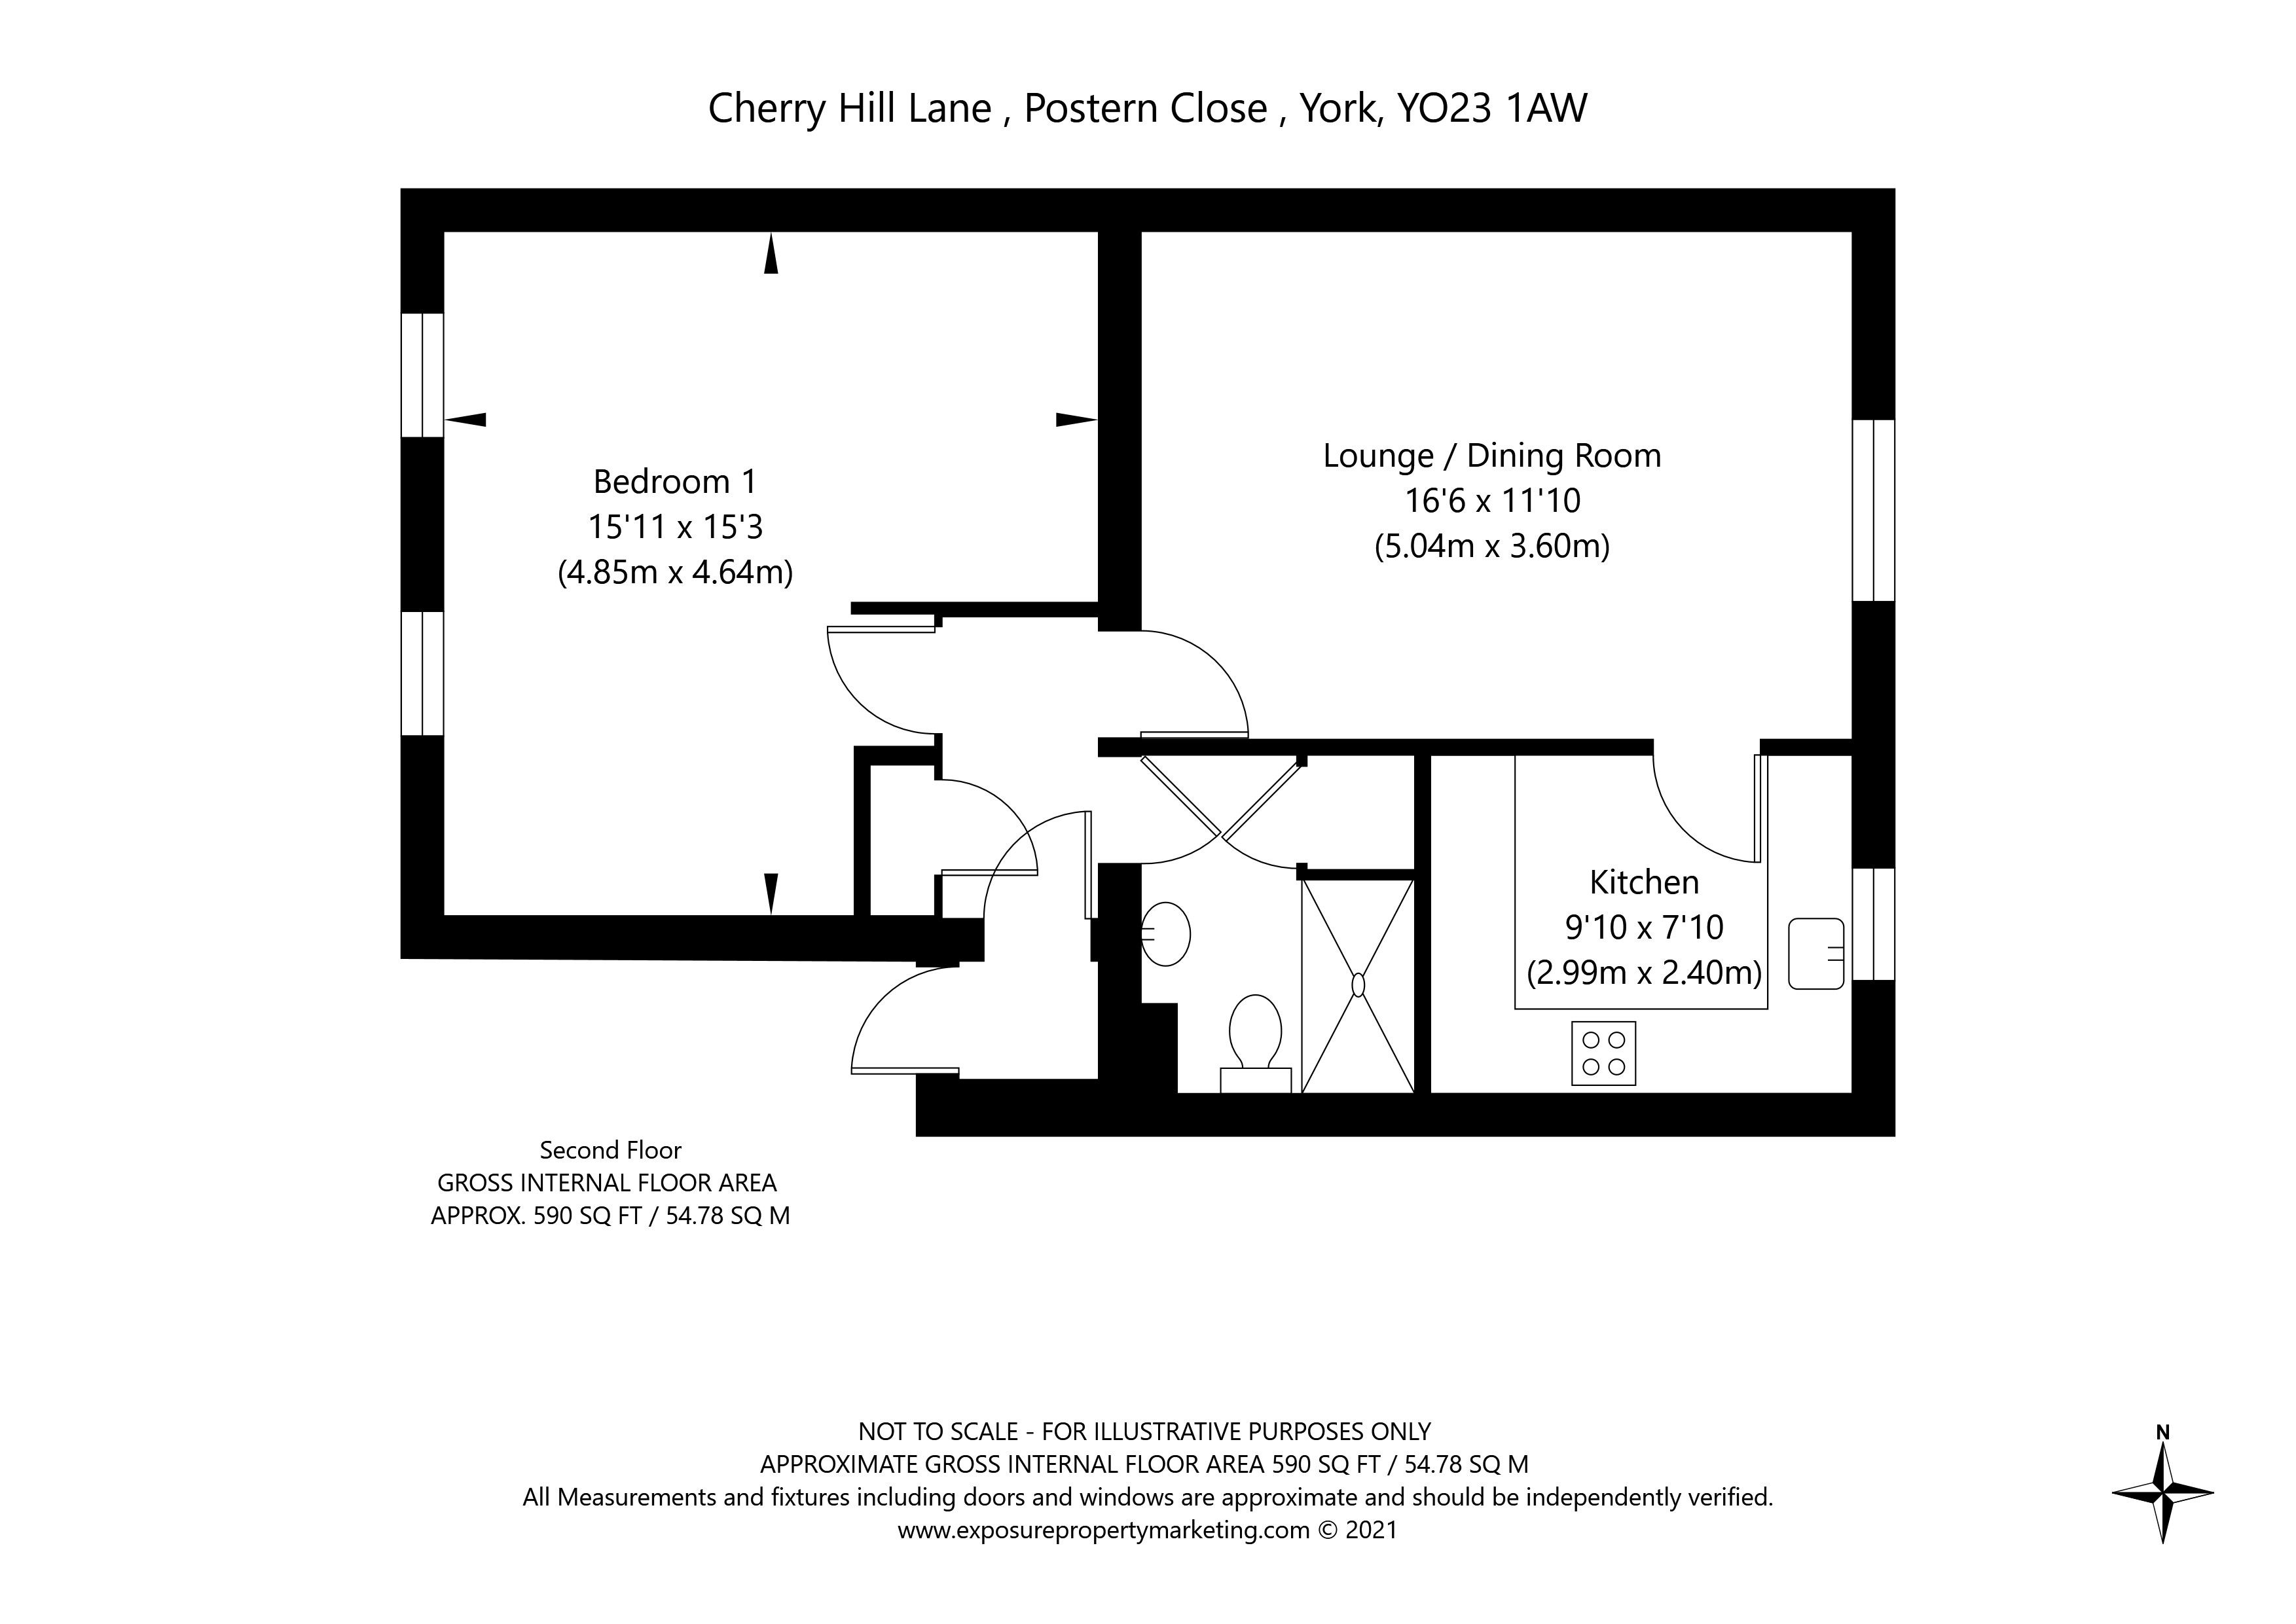 Cherry Hill Lane, York property floorplan